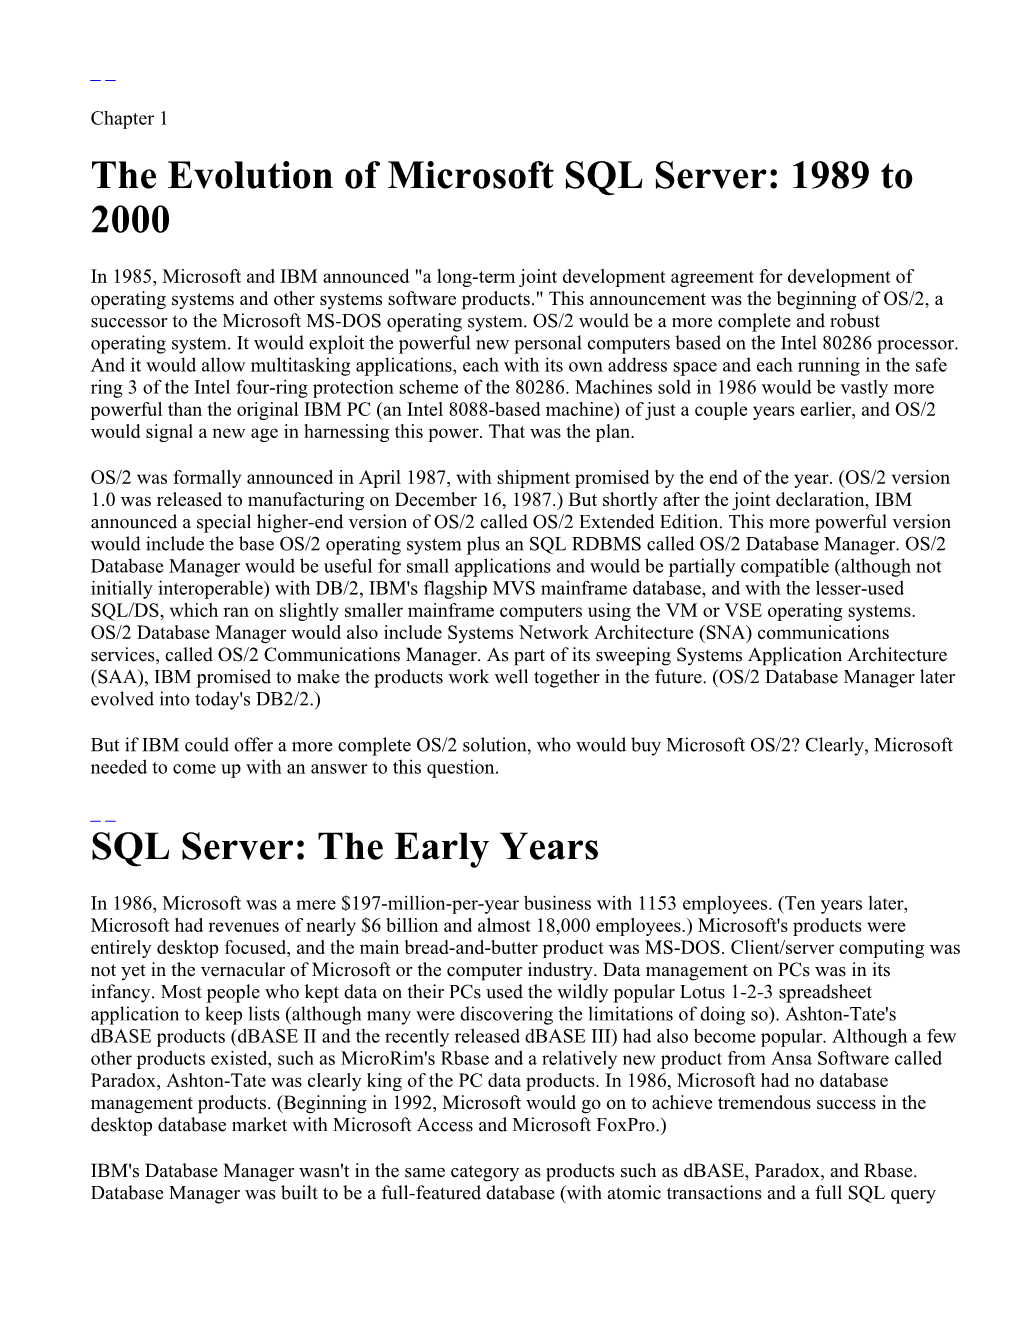 The Evolution of Microsoft SQL Server: 1989 to 2000